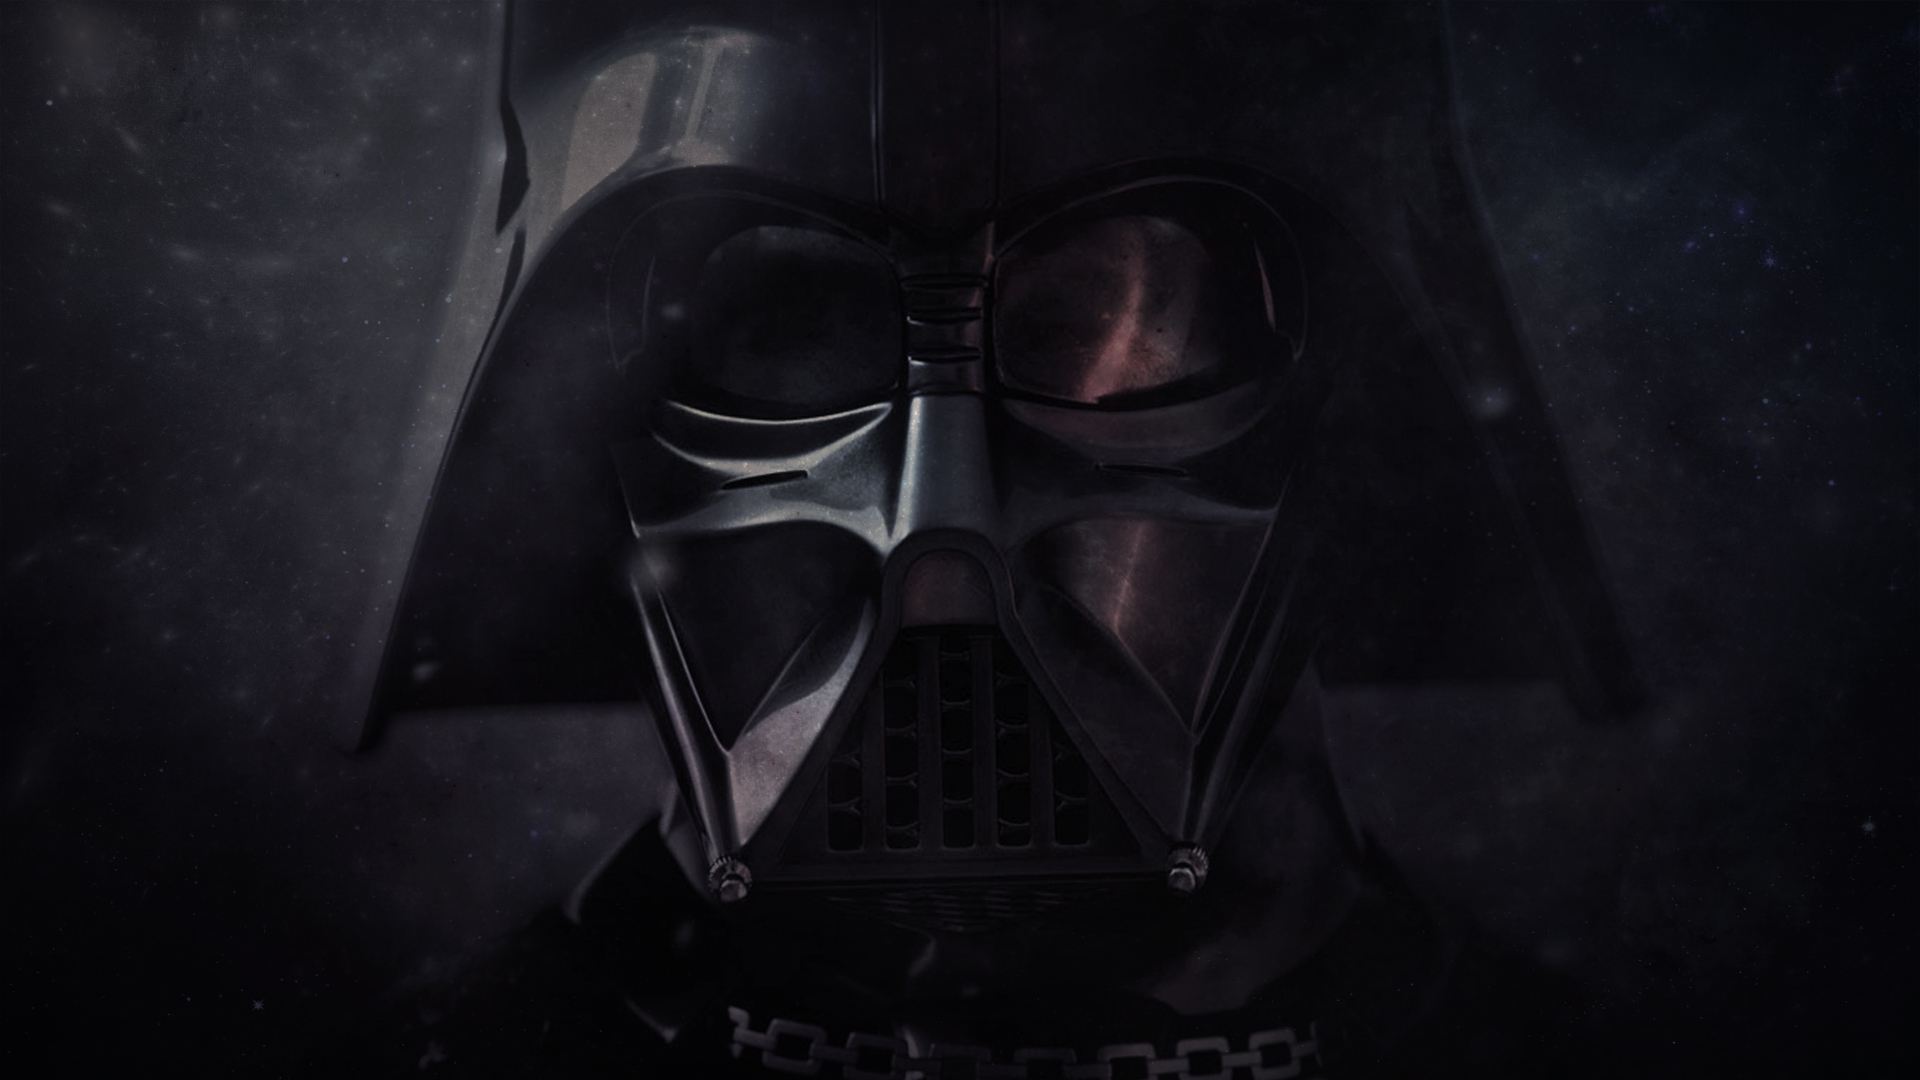 Wallpaper 1080p Darth Vader By Iamsointense